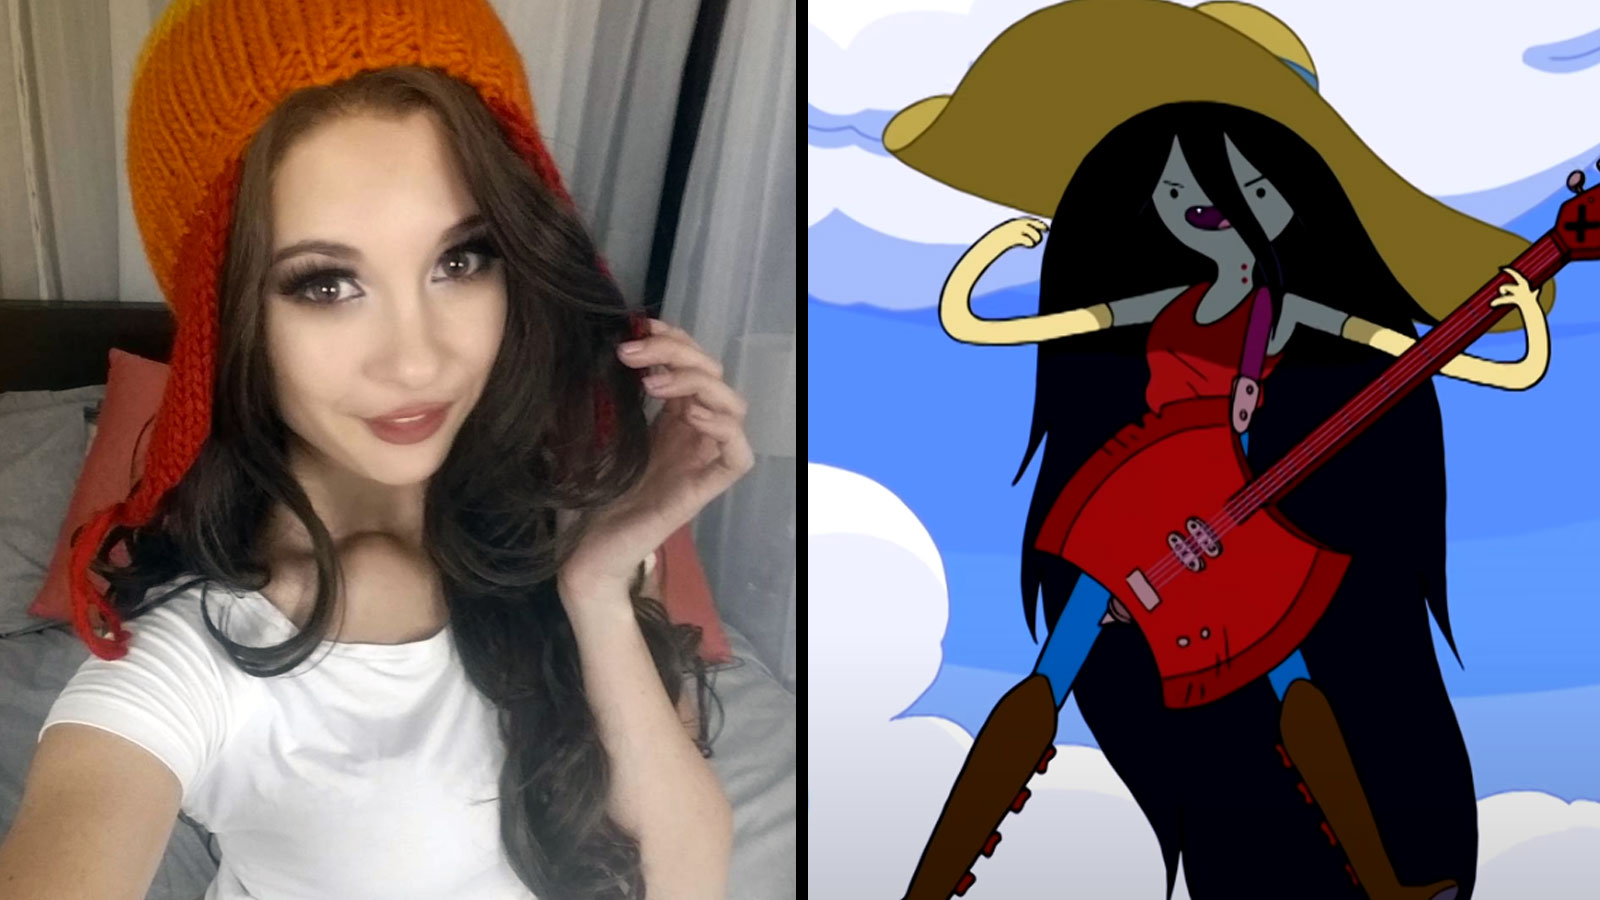 Adventure Time cosplayer goes viral as epic Marceline the Vampire Queen - Dexerto